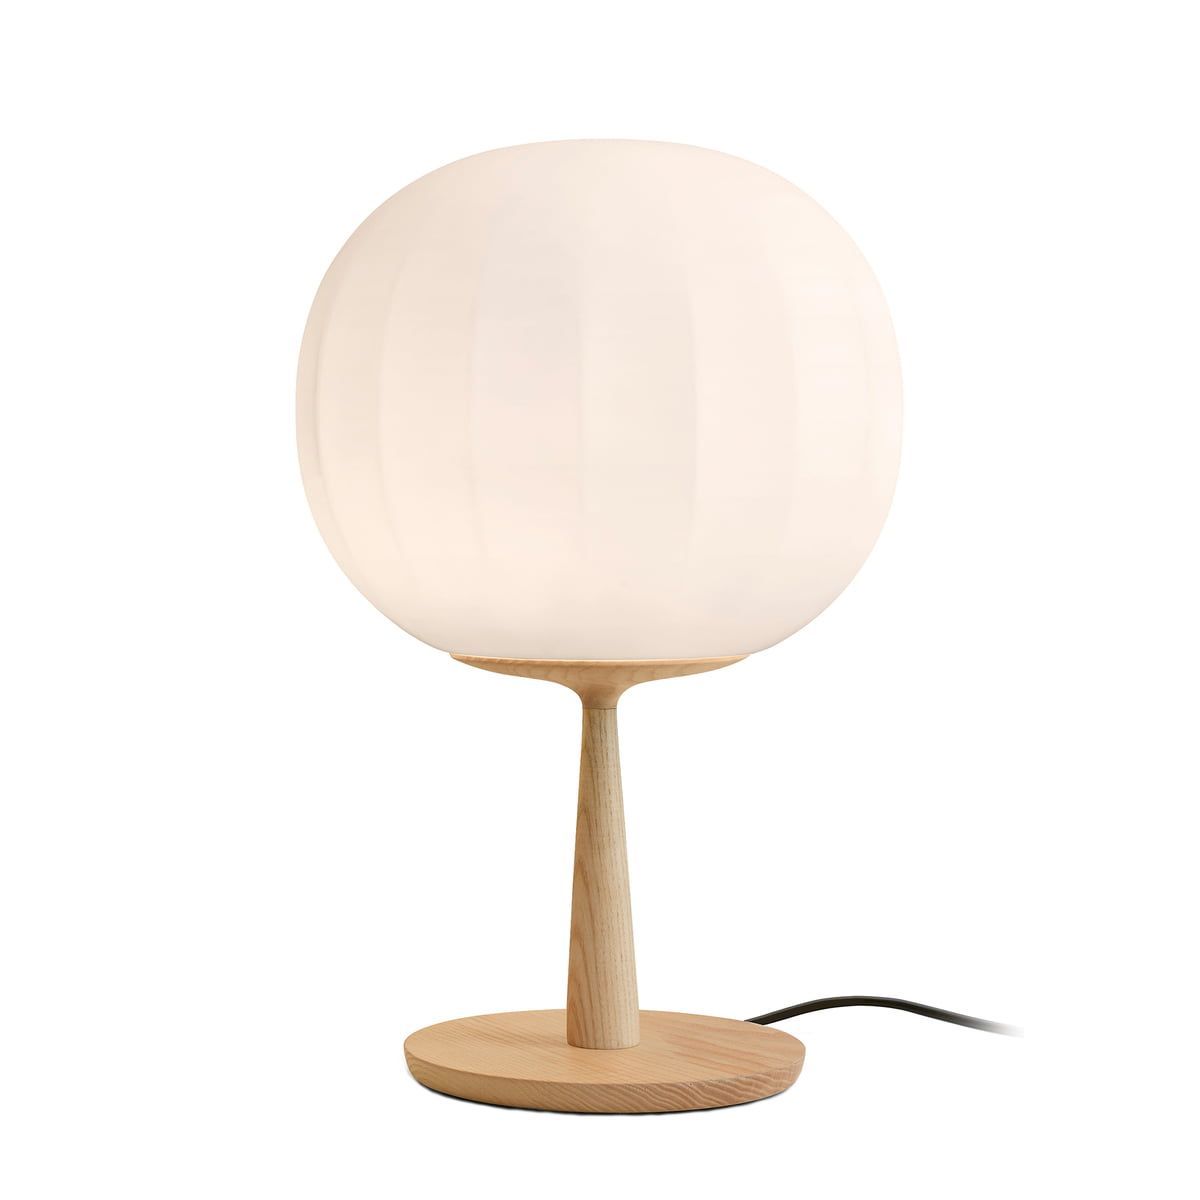 Lita by Luceplan table lamp